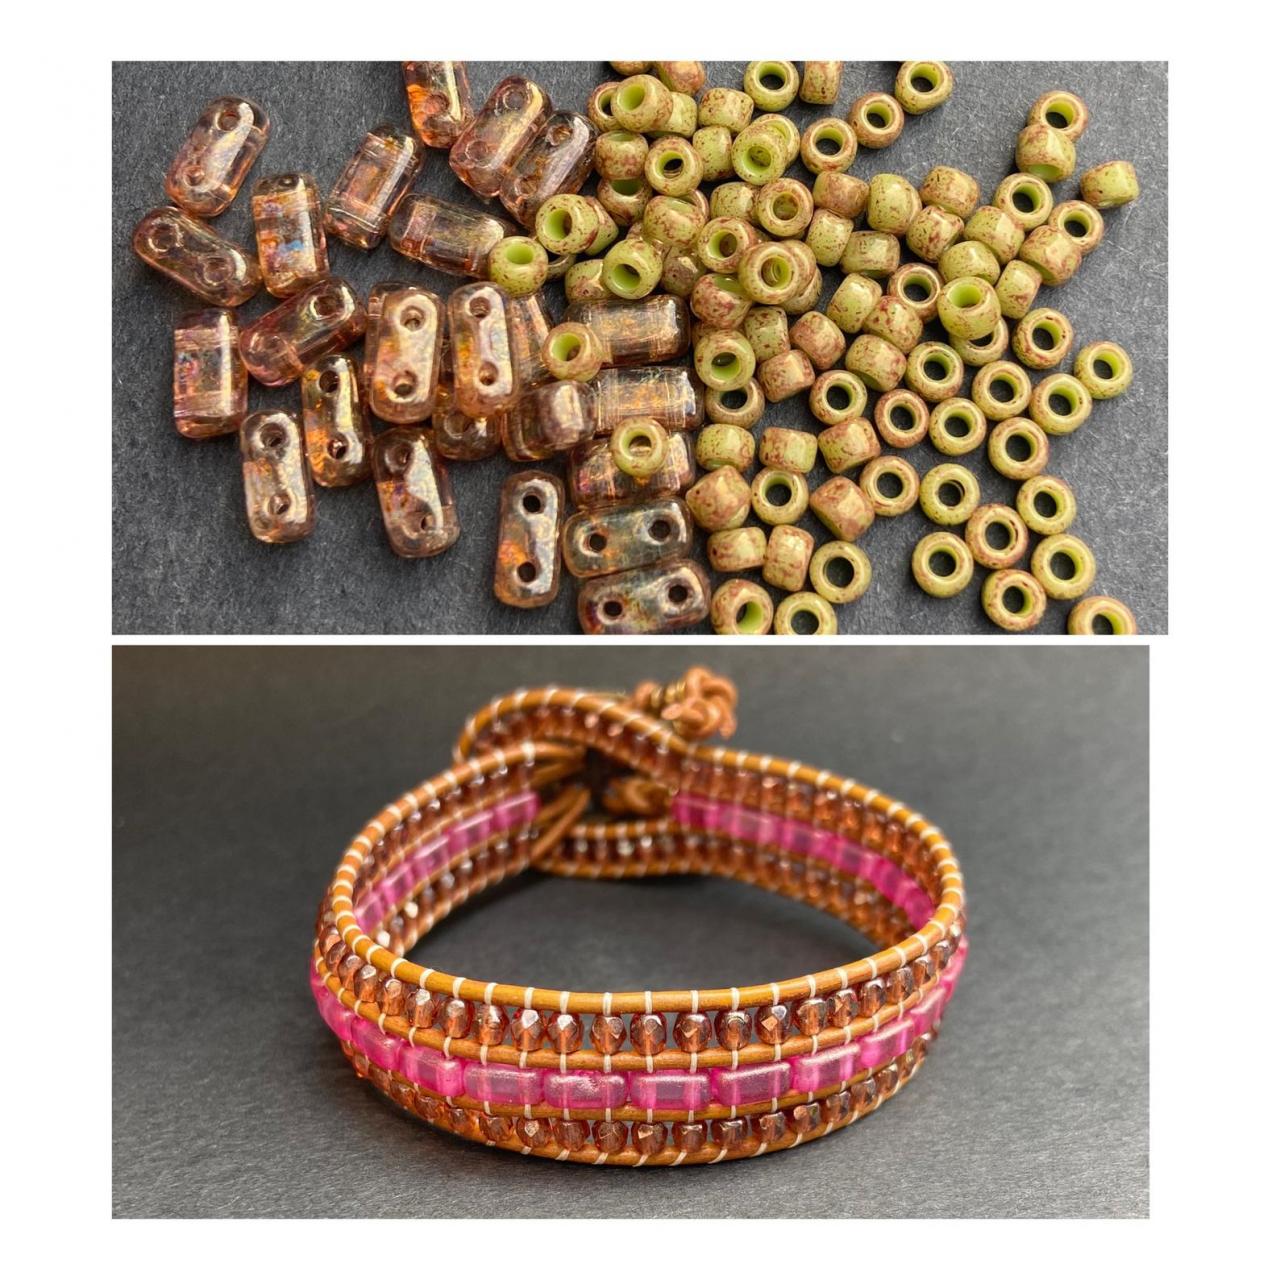 KIT Pink Rose Rust Olive Gold Luster Bracelet Cuff Leather 2-Holed Brick DIY Complete Instructions